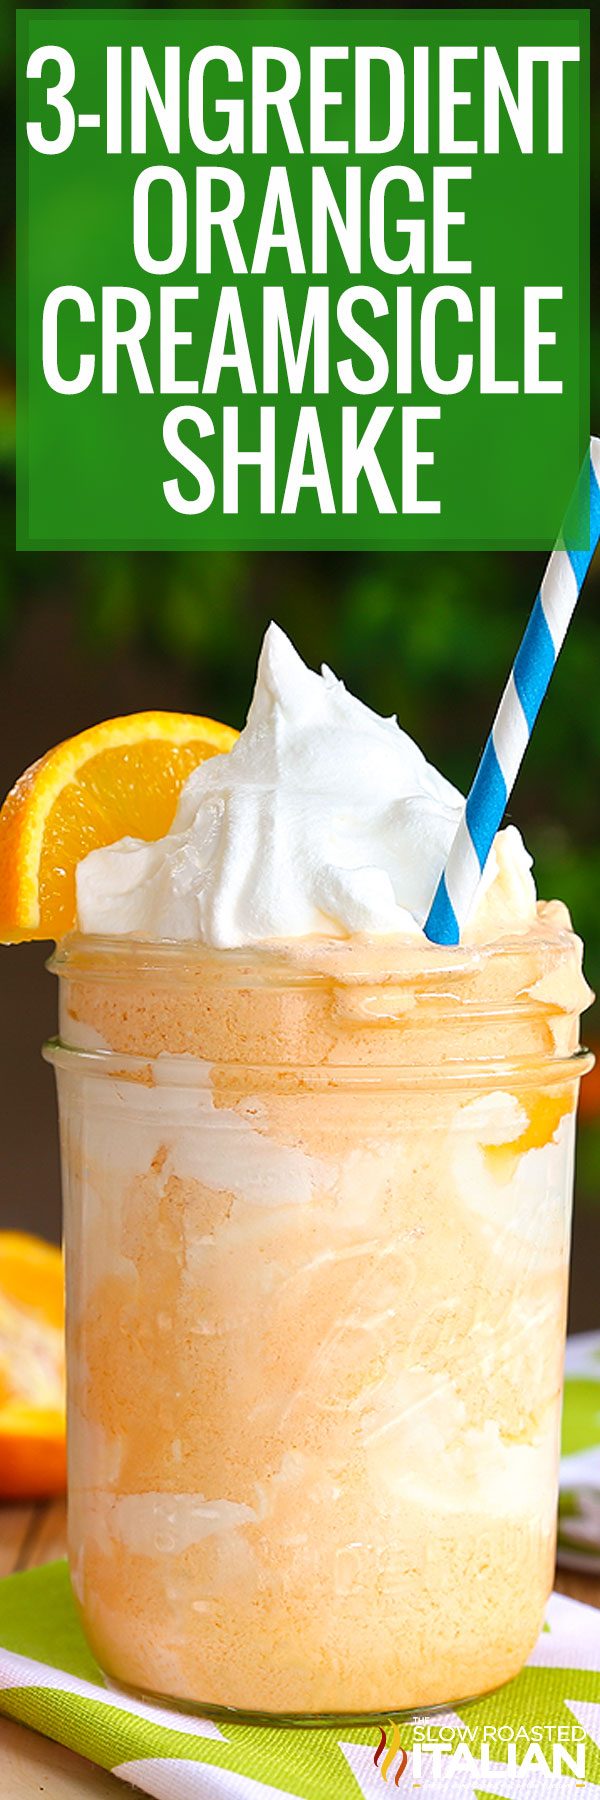 titled image (and shown): 3-ingredient orange creamsicle shake